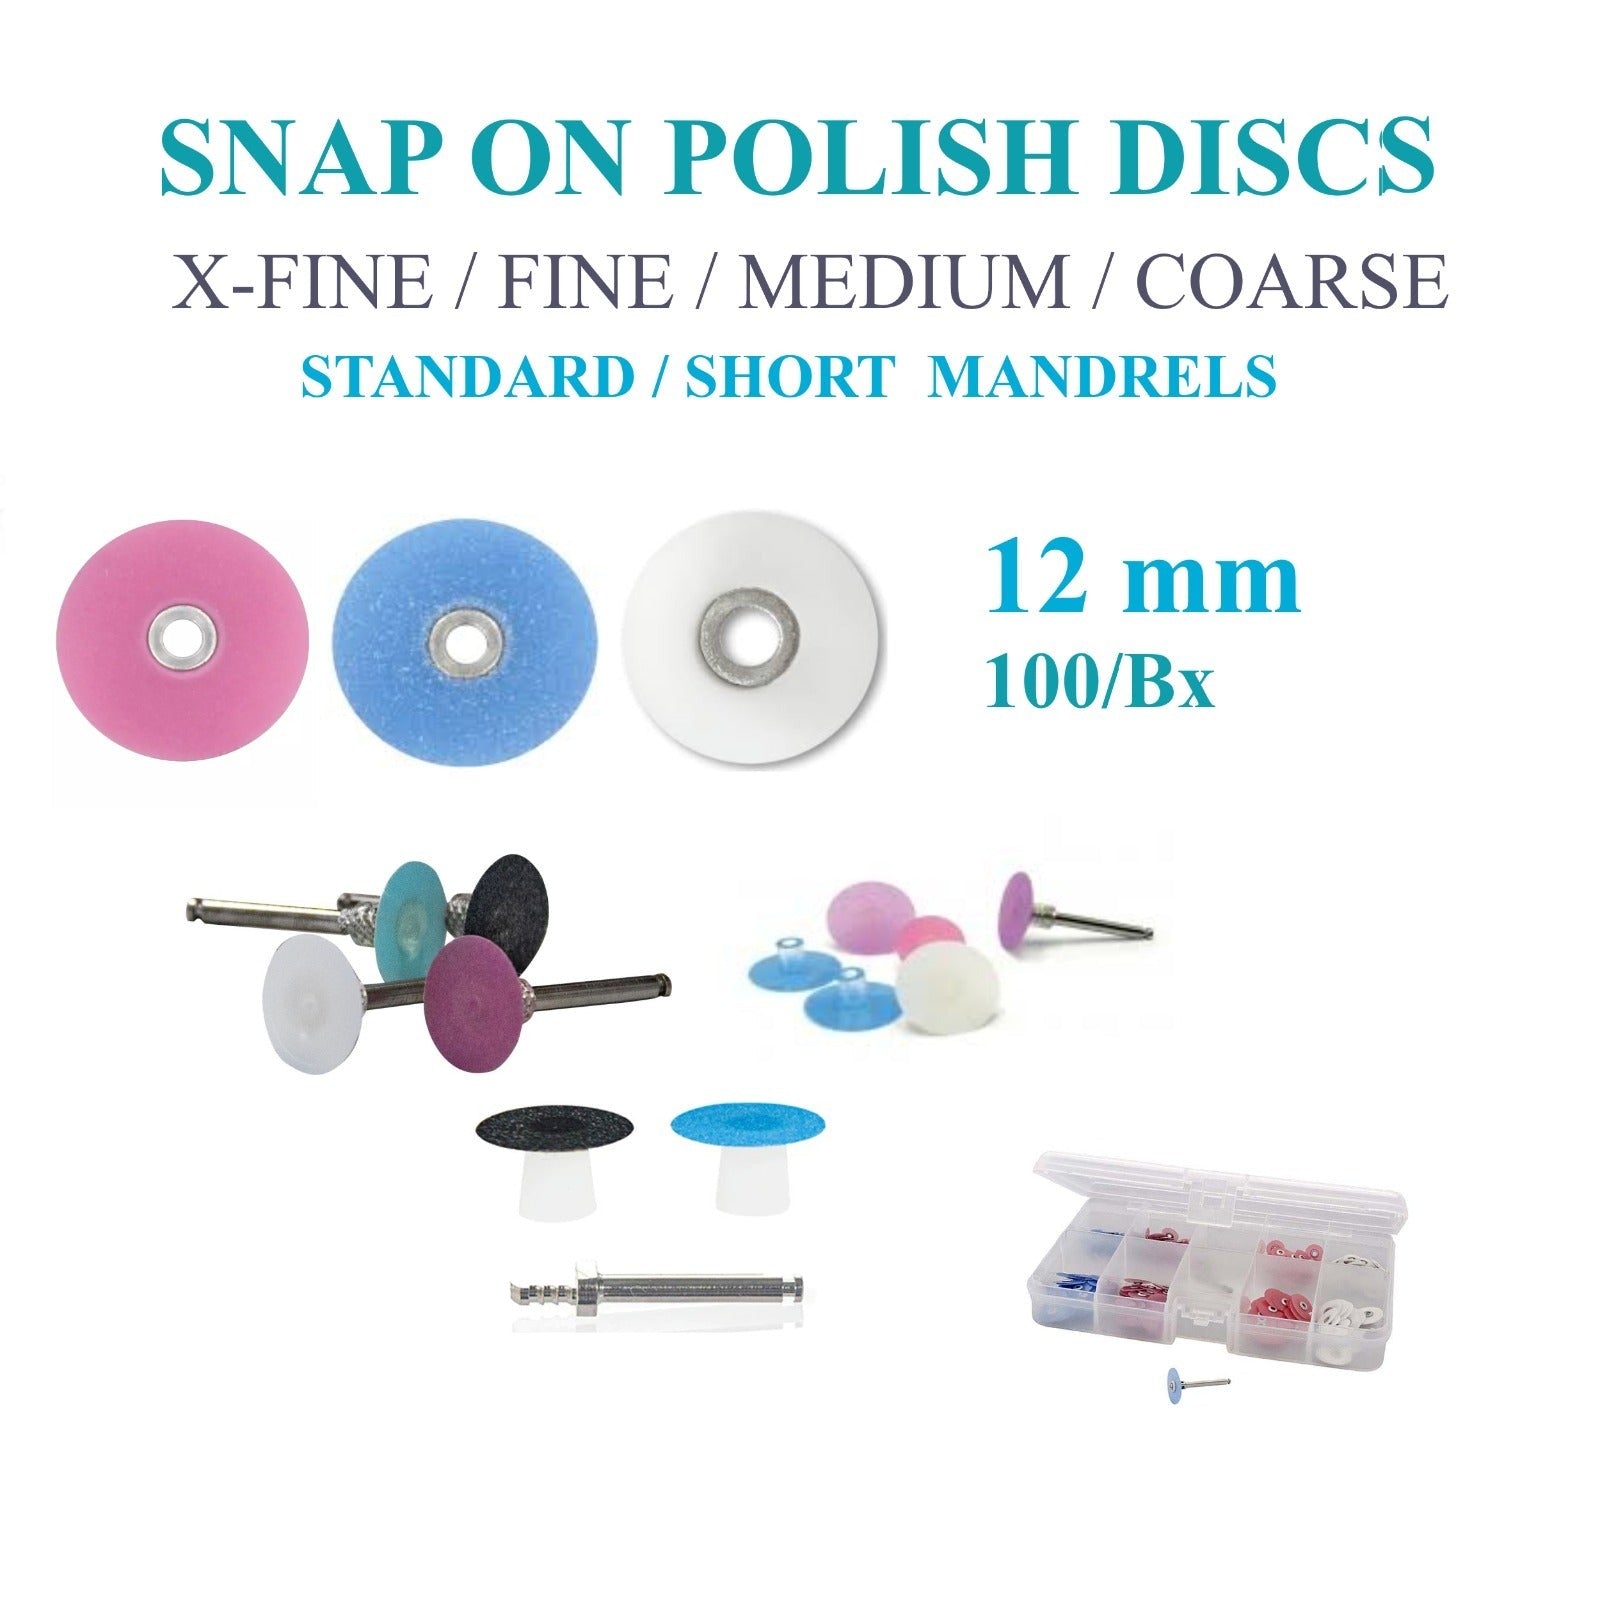 Plasdent Snap On Polish Discs